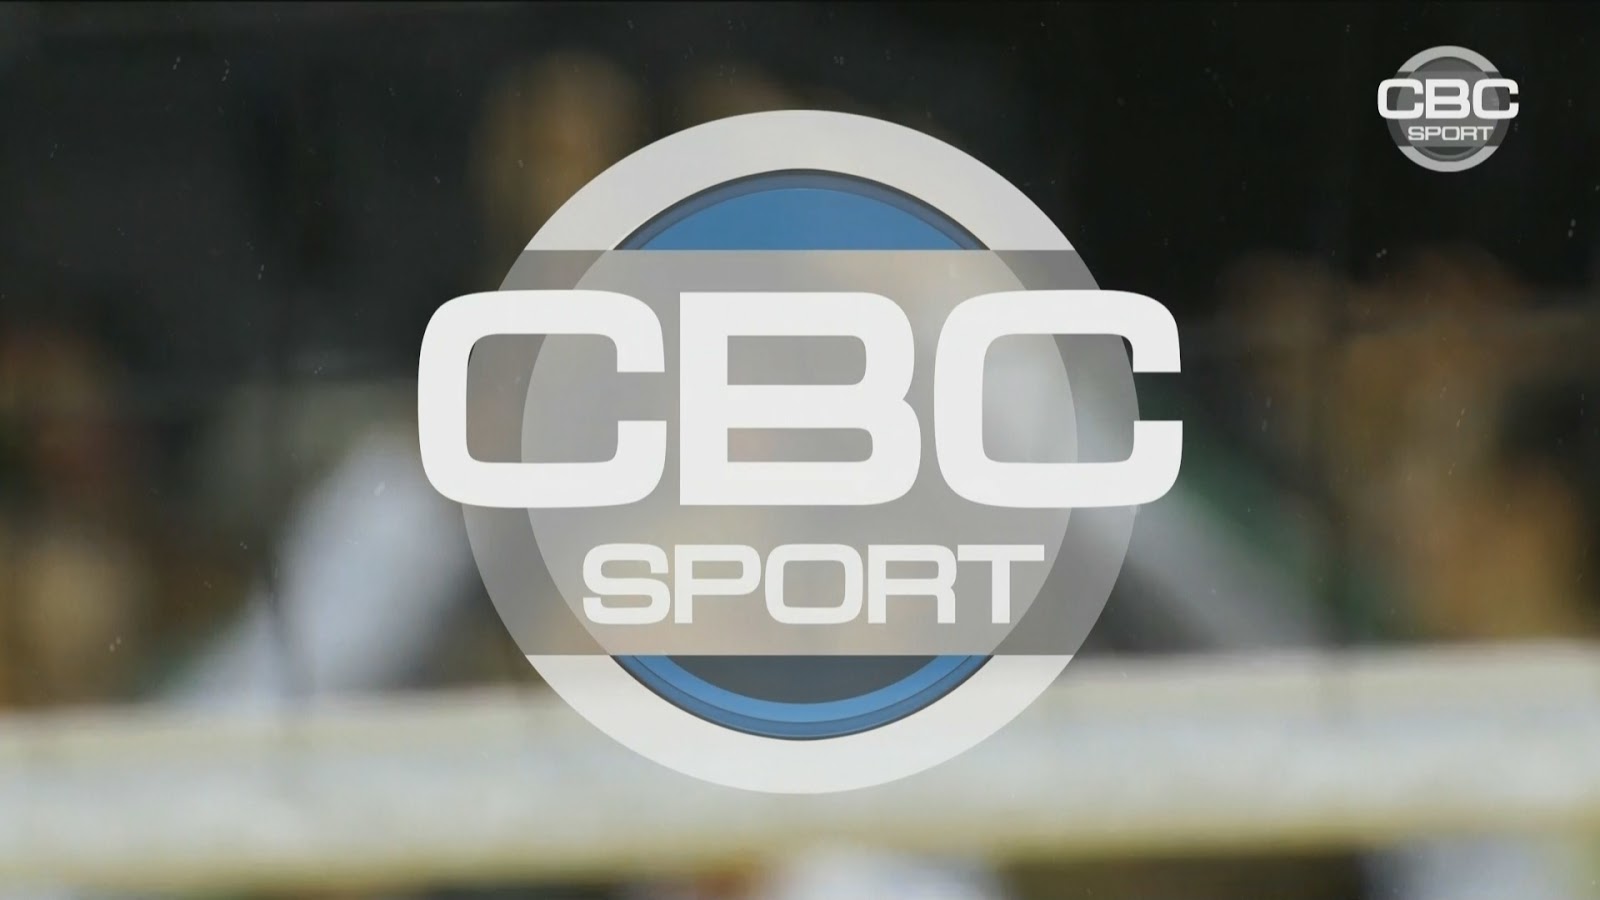 Cbc sport azerbaycan kesintisiz canli. Канал CBC Sport. СВС Sport Canli. CBC Sport Canli. CBC Sport одежда.